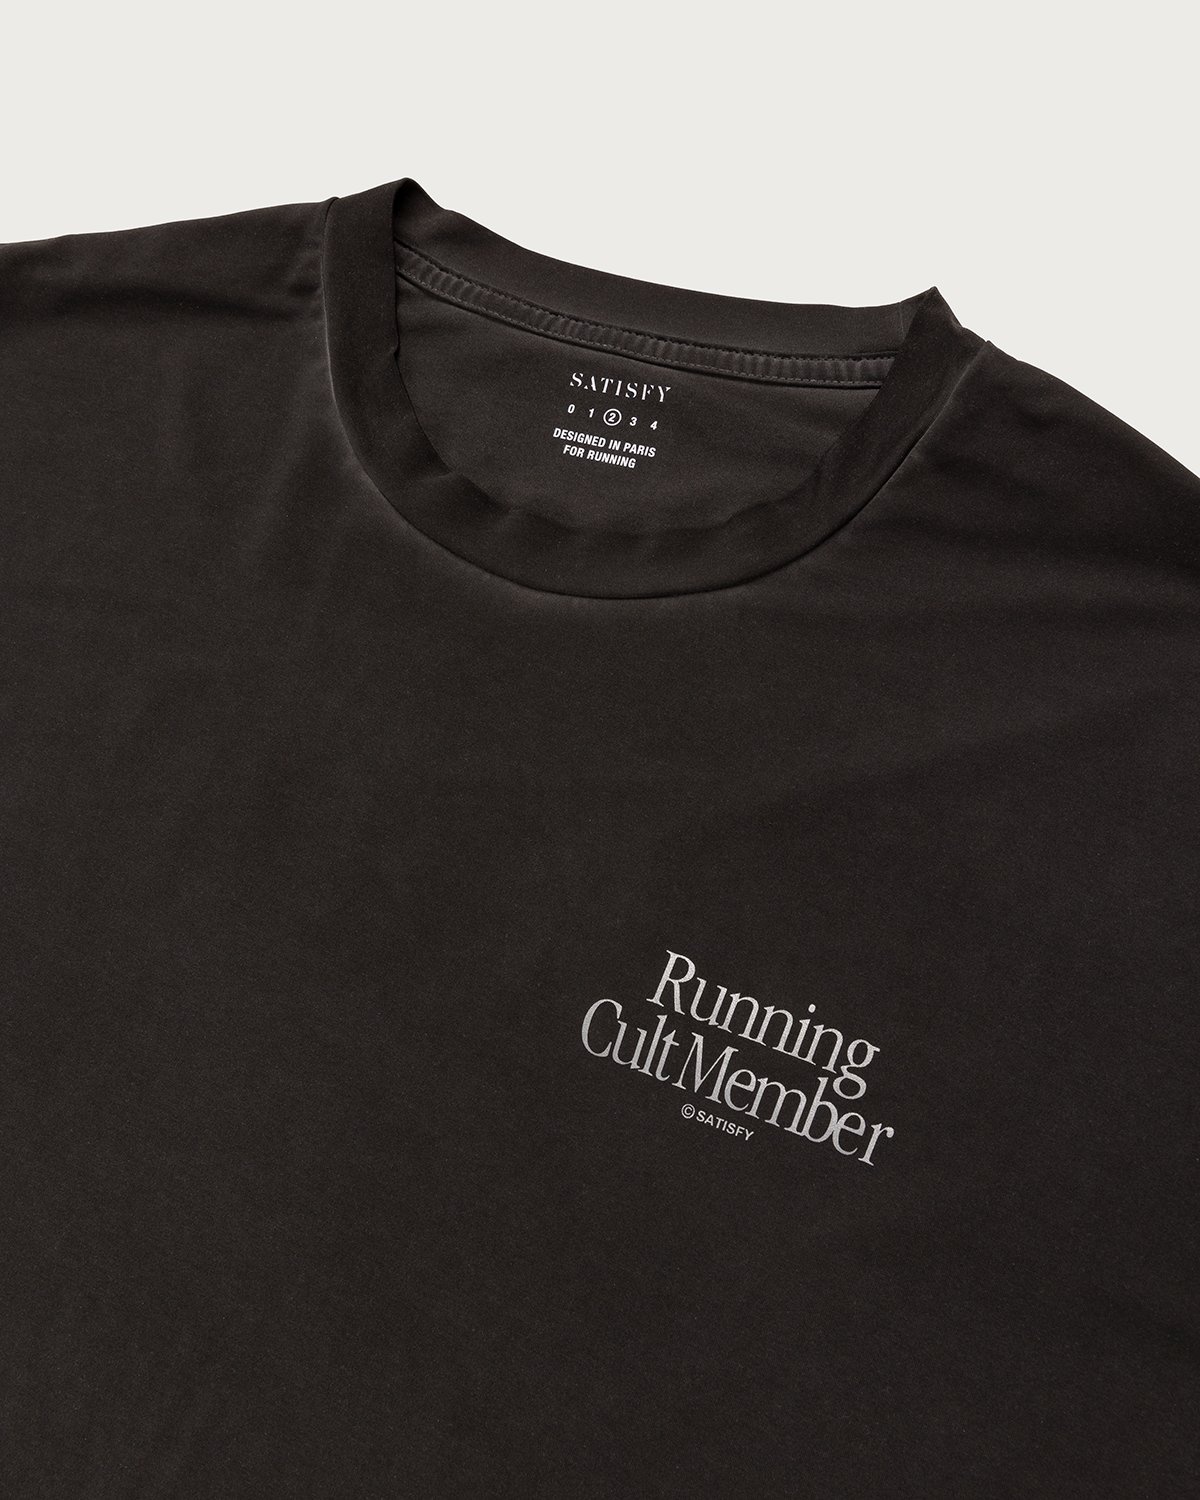 Satisfy x Highsnobiety – HS Sports Balance T-Shirt Black Pigment - T-Shirts - Grey - Image 5